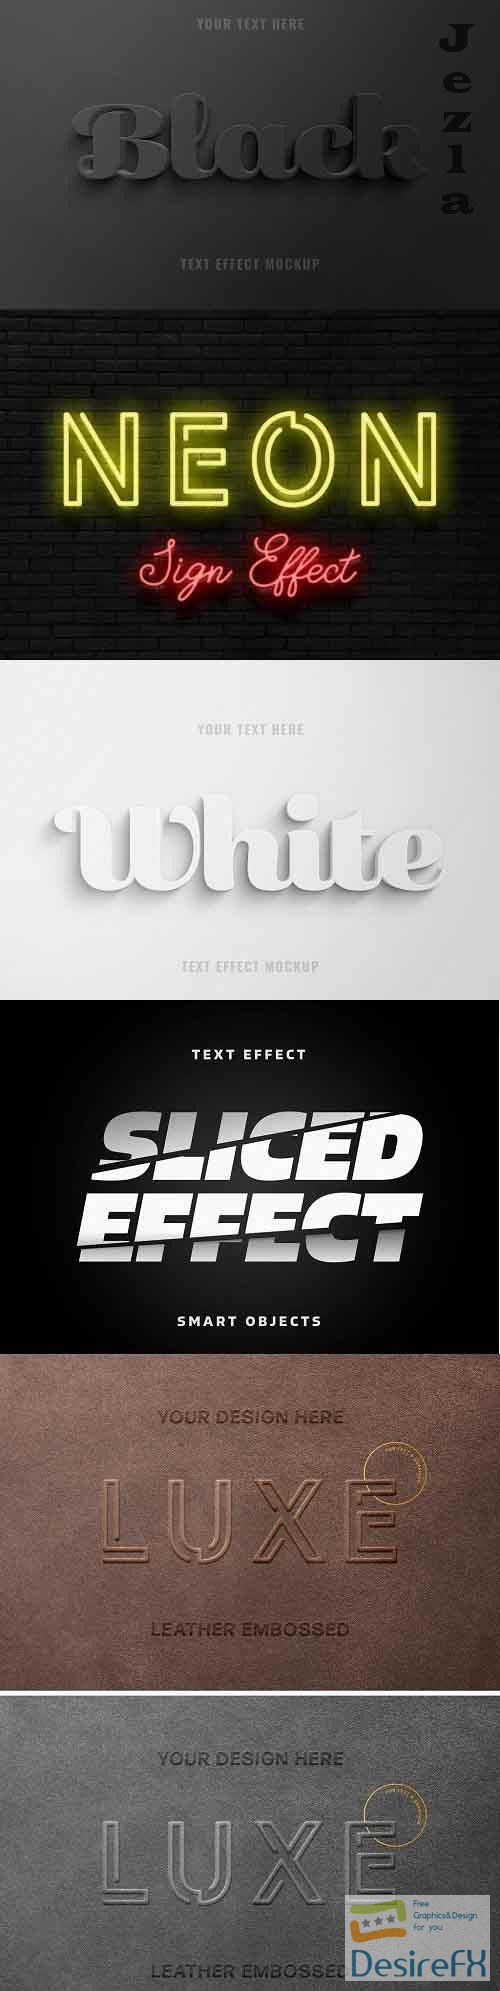 Text Effect Mockup